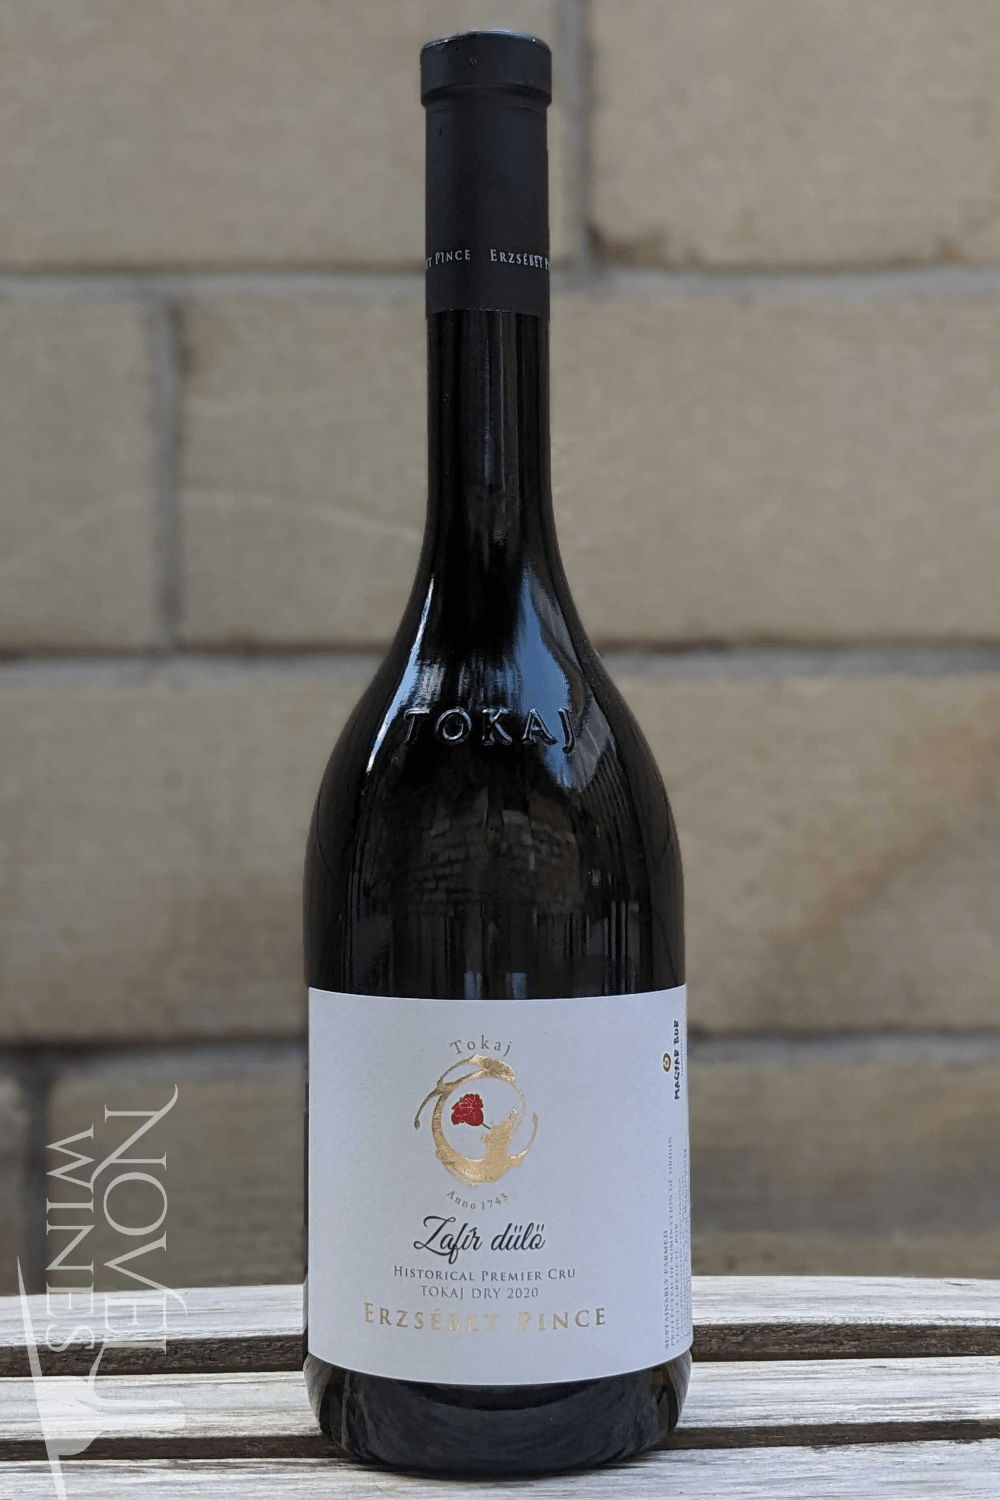 Erzsebet Pince White Wine Erzsebet Pince Zafir Dűlő Single Vineyard 2020, Hungary